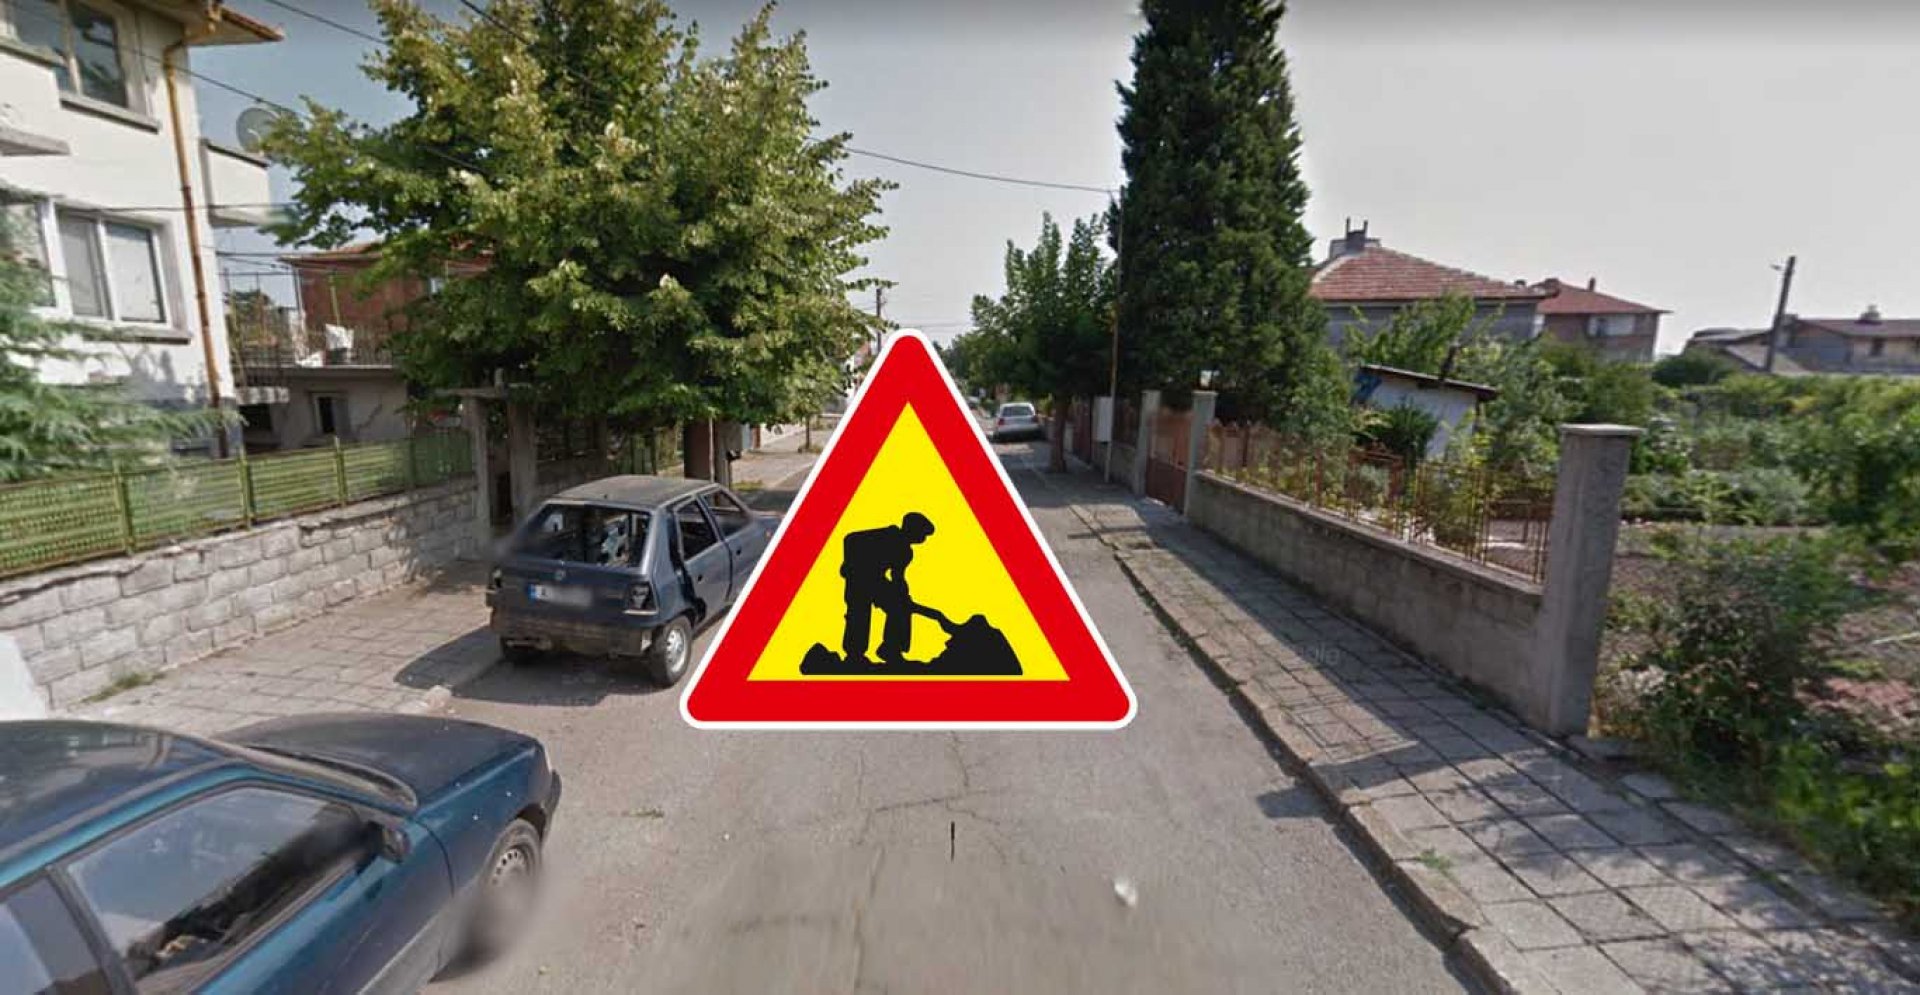 Затварят за месец част от улица в Долно Езерово заради ново ВиК - E-Burgas.com